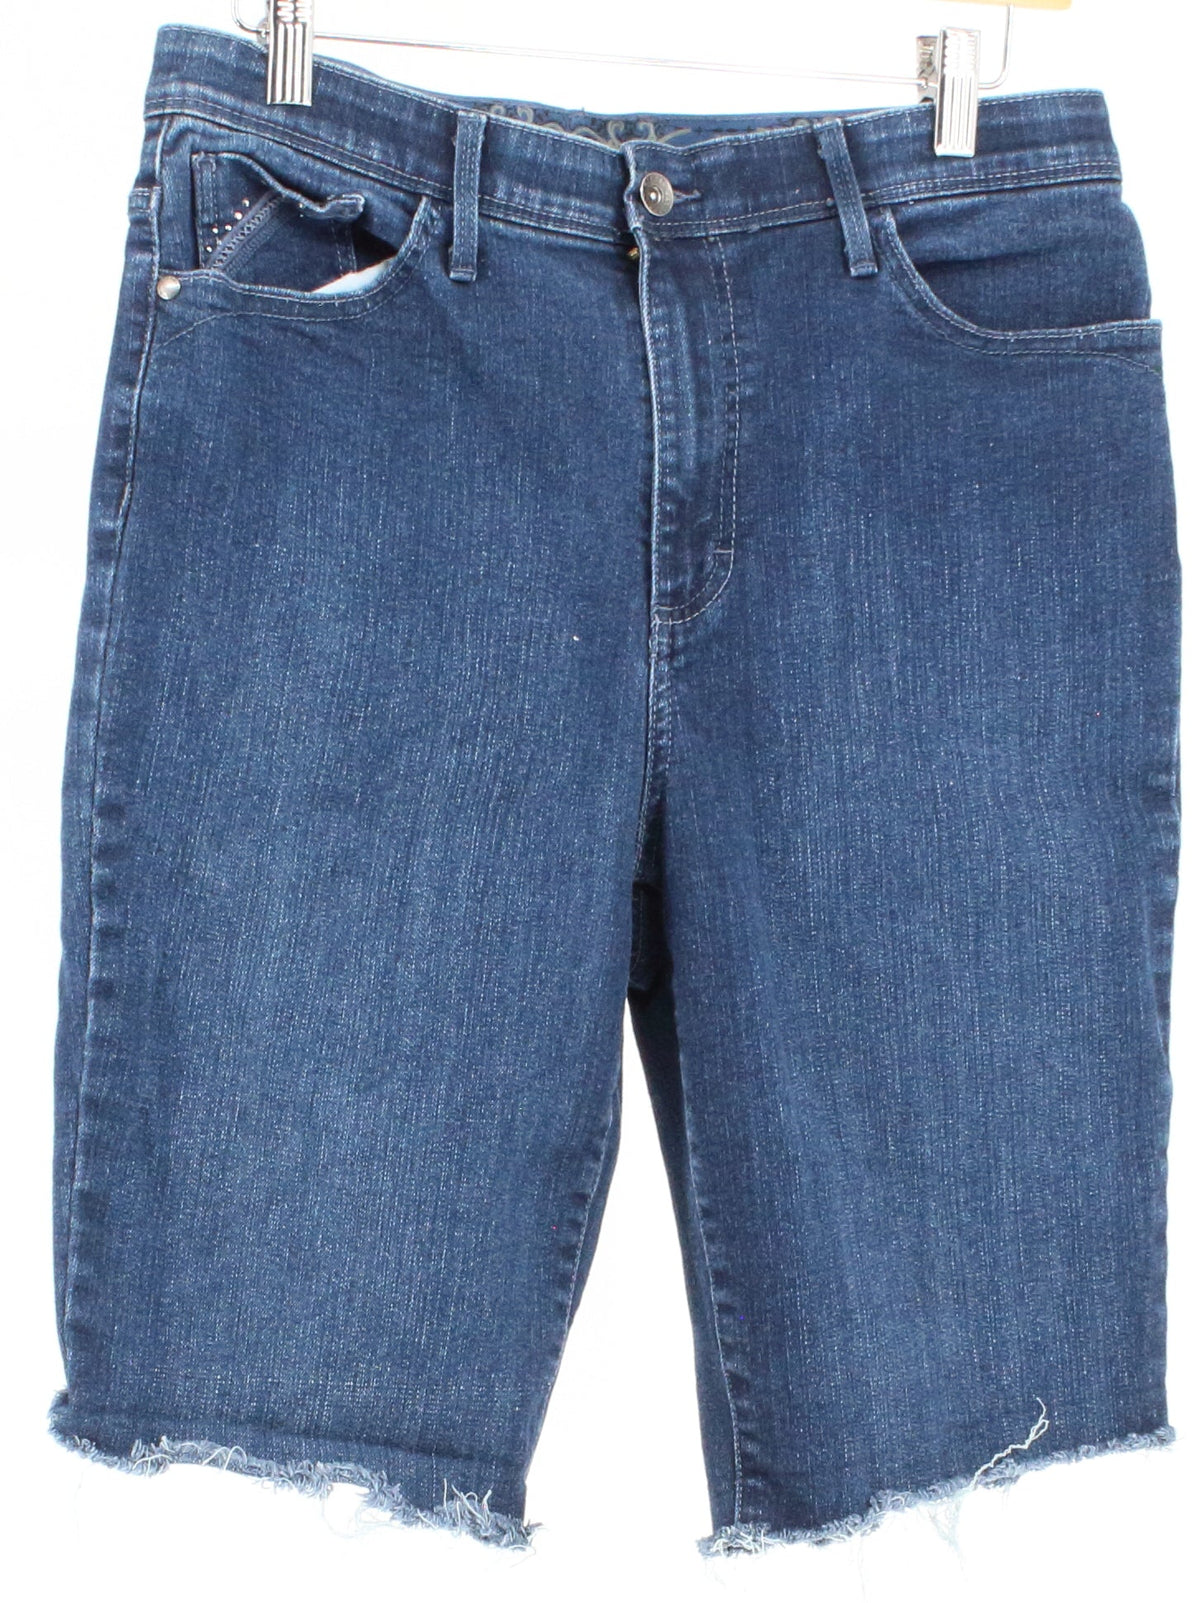 Gloria Vanderbilt Bottom Hem Distressed Denim Blue Shorts